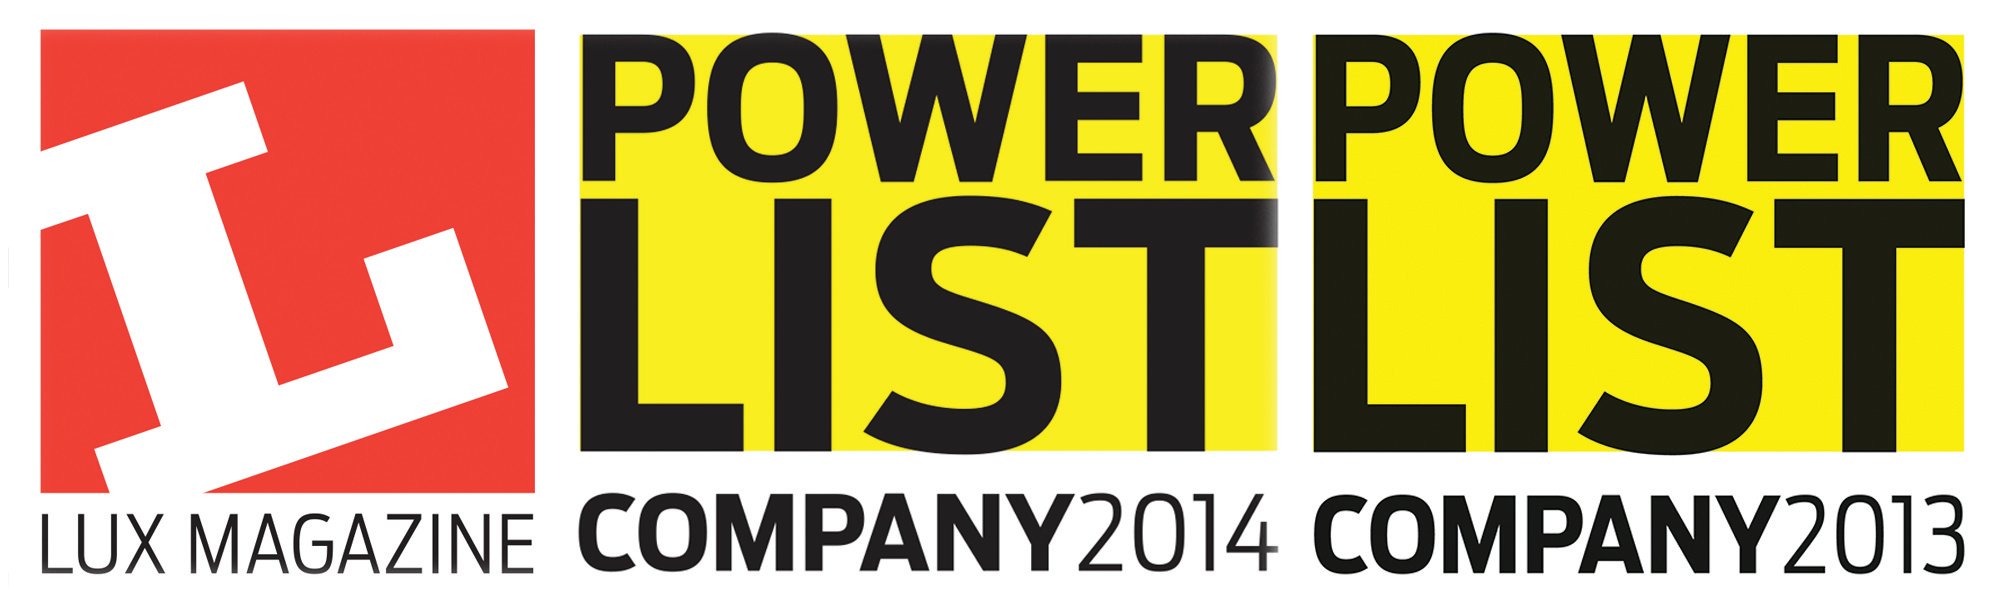 Lux Power list logos 2013 & 2014